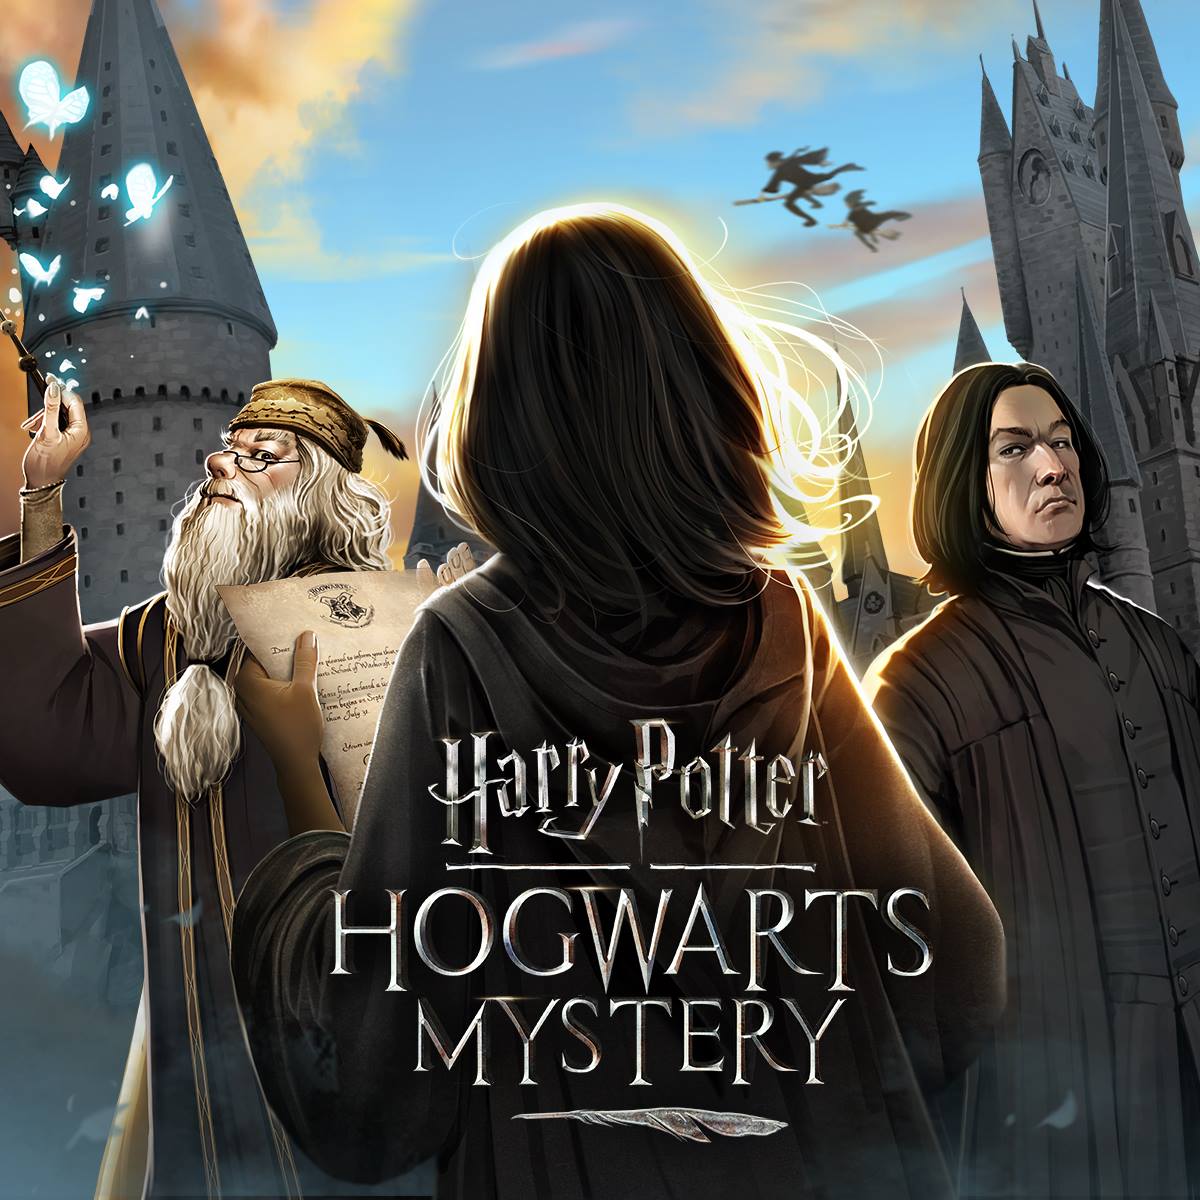 harry potter hogwarts mystery gameplay